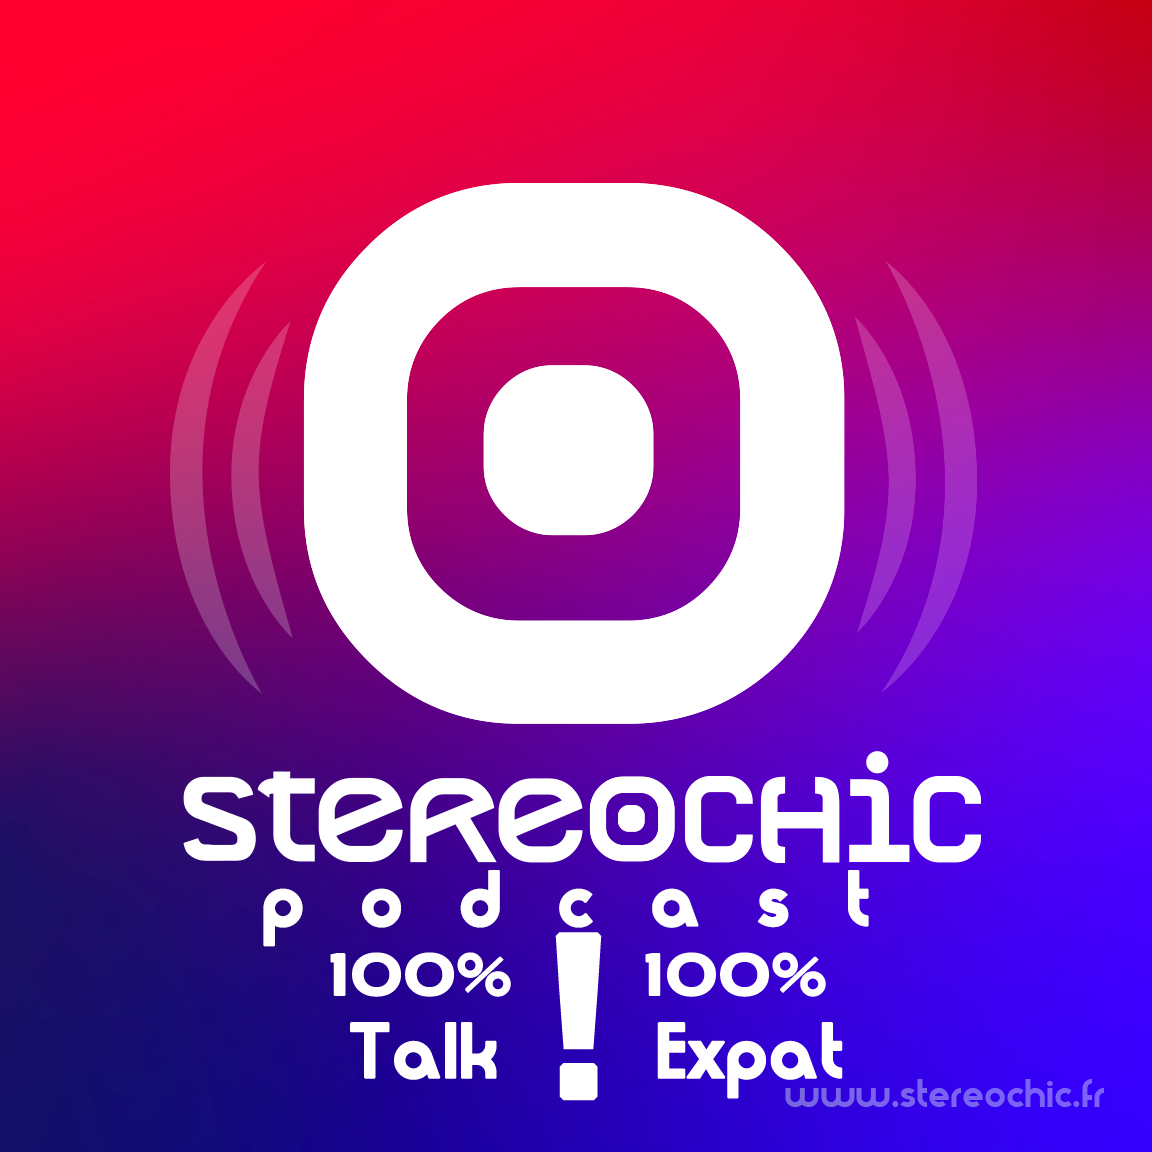 Ecoutez StereoChic Podcast, la radio 100% Talk, 100% Expat